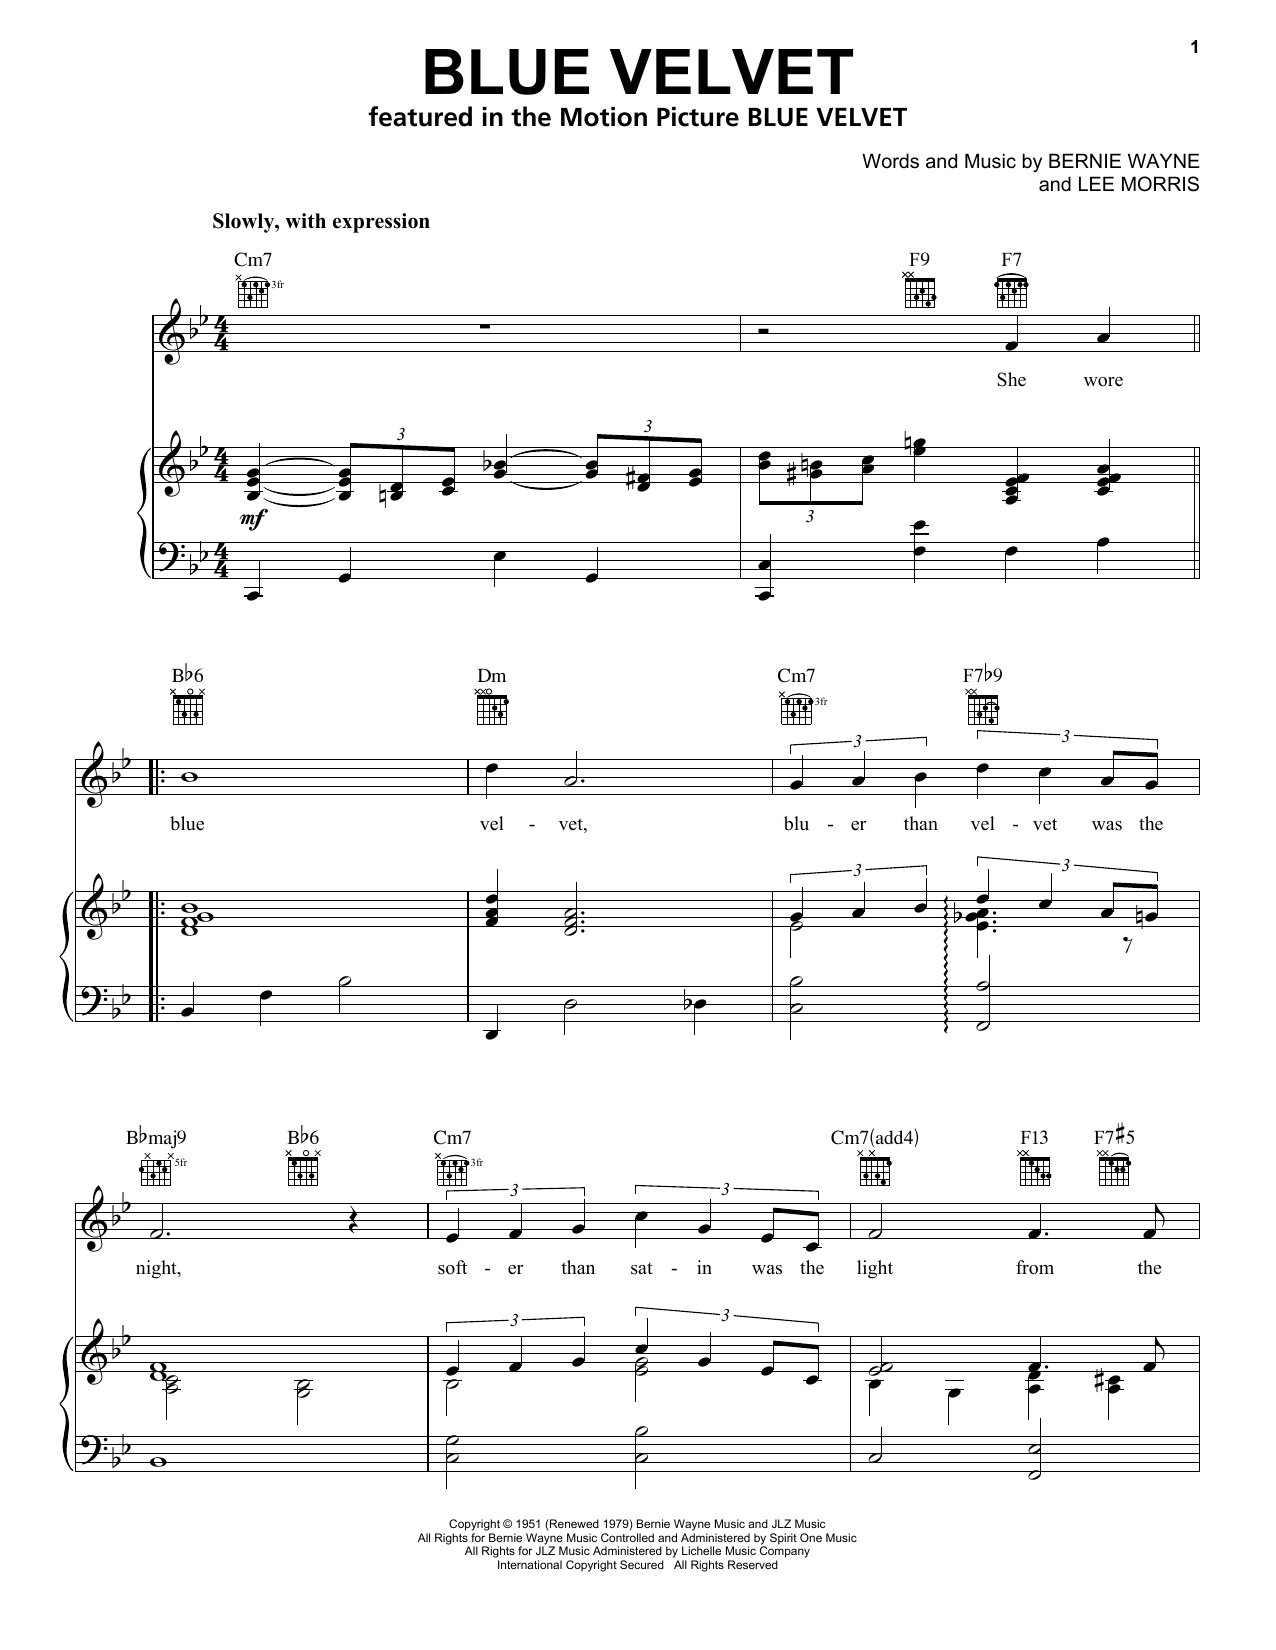 Bobby Vinton Blue Velvet Sheet Music Notes & Chords for Violin - Download or Print PDF